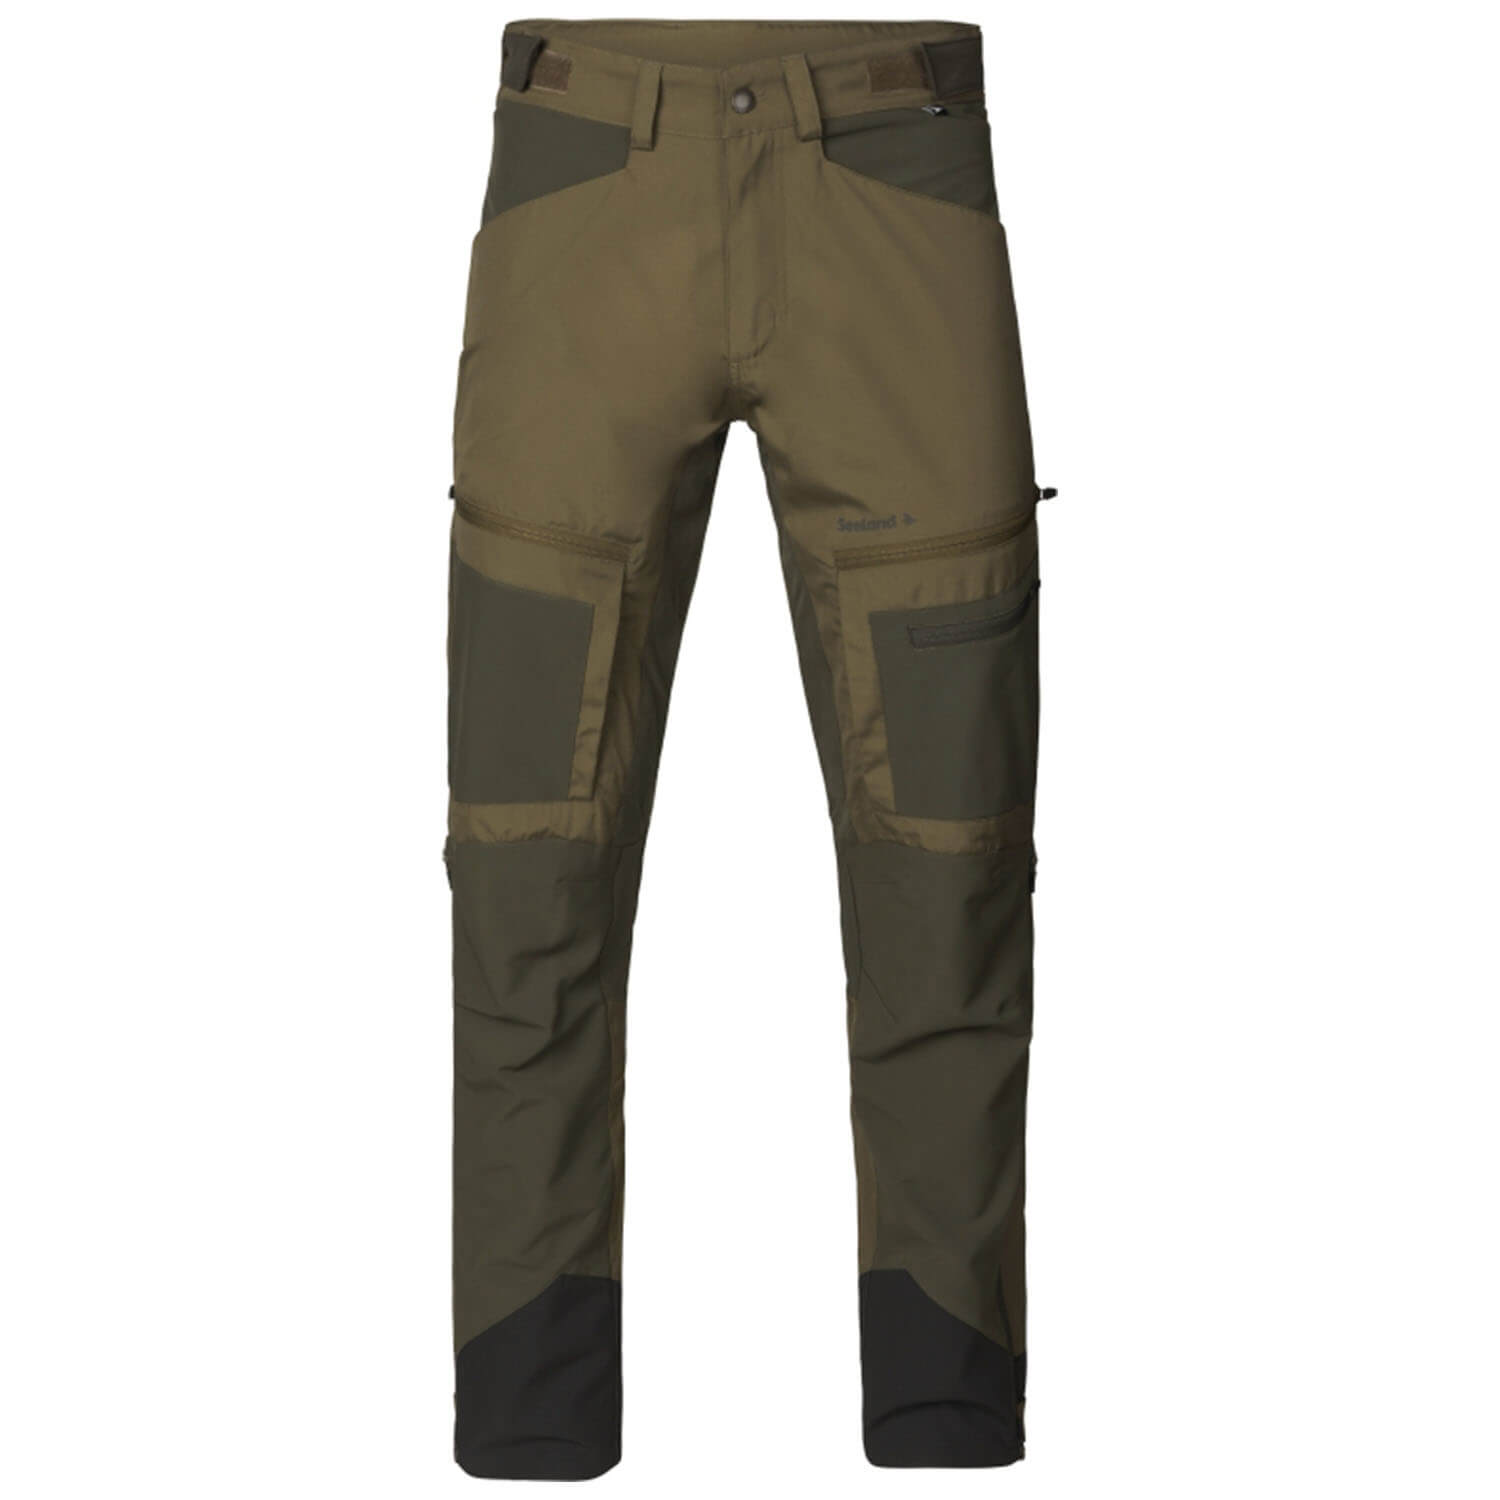 Seeland pants hemlock (Military Olive/Pine Green)